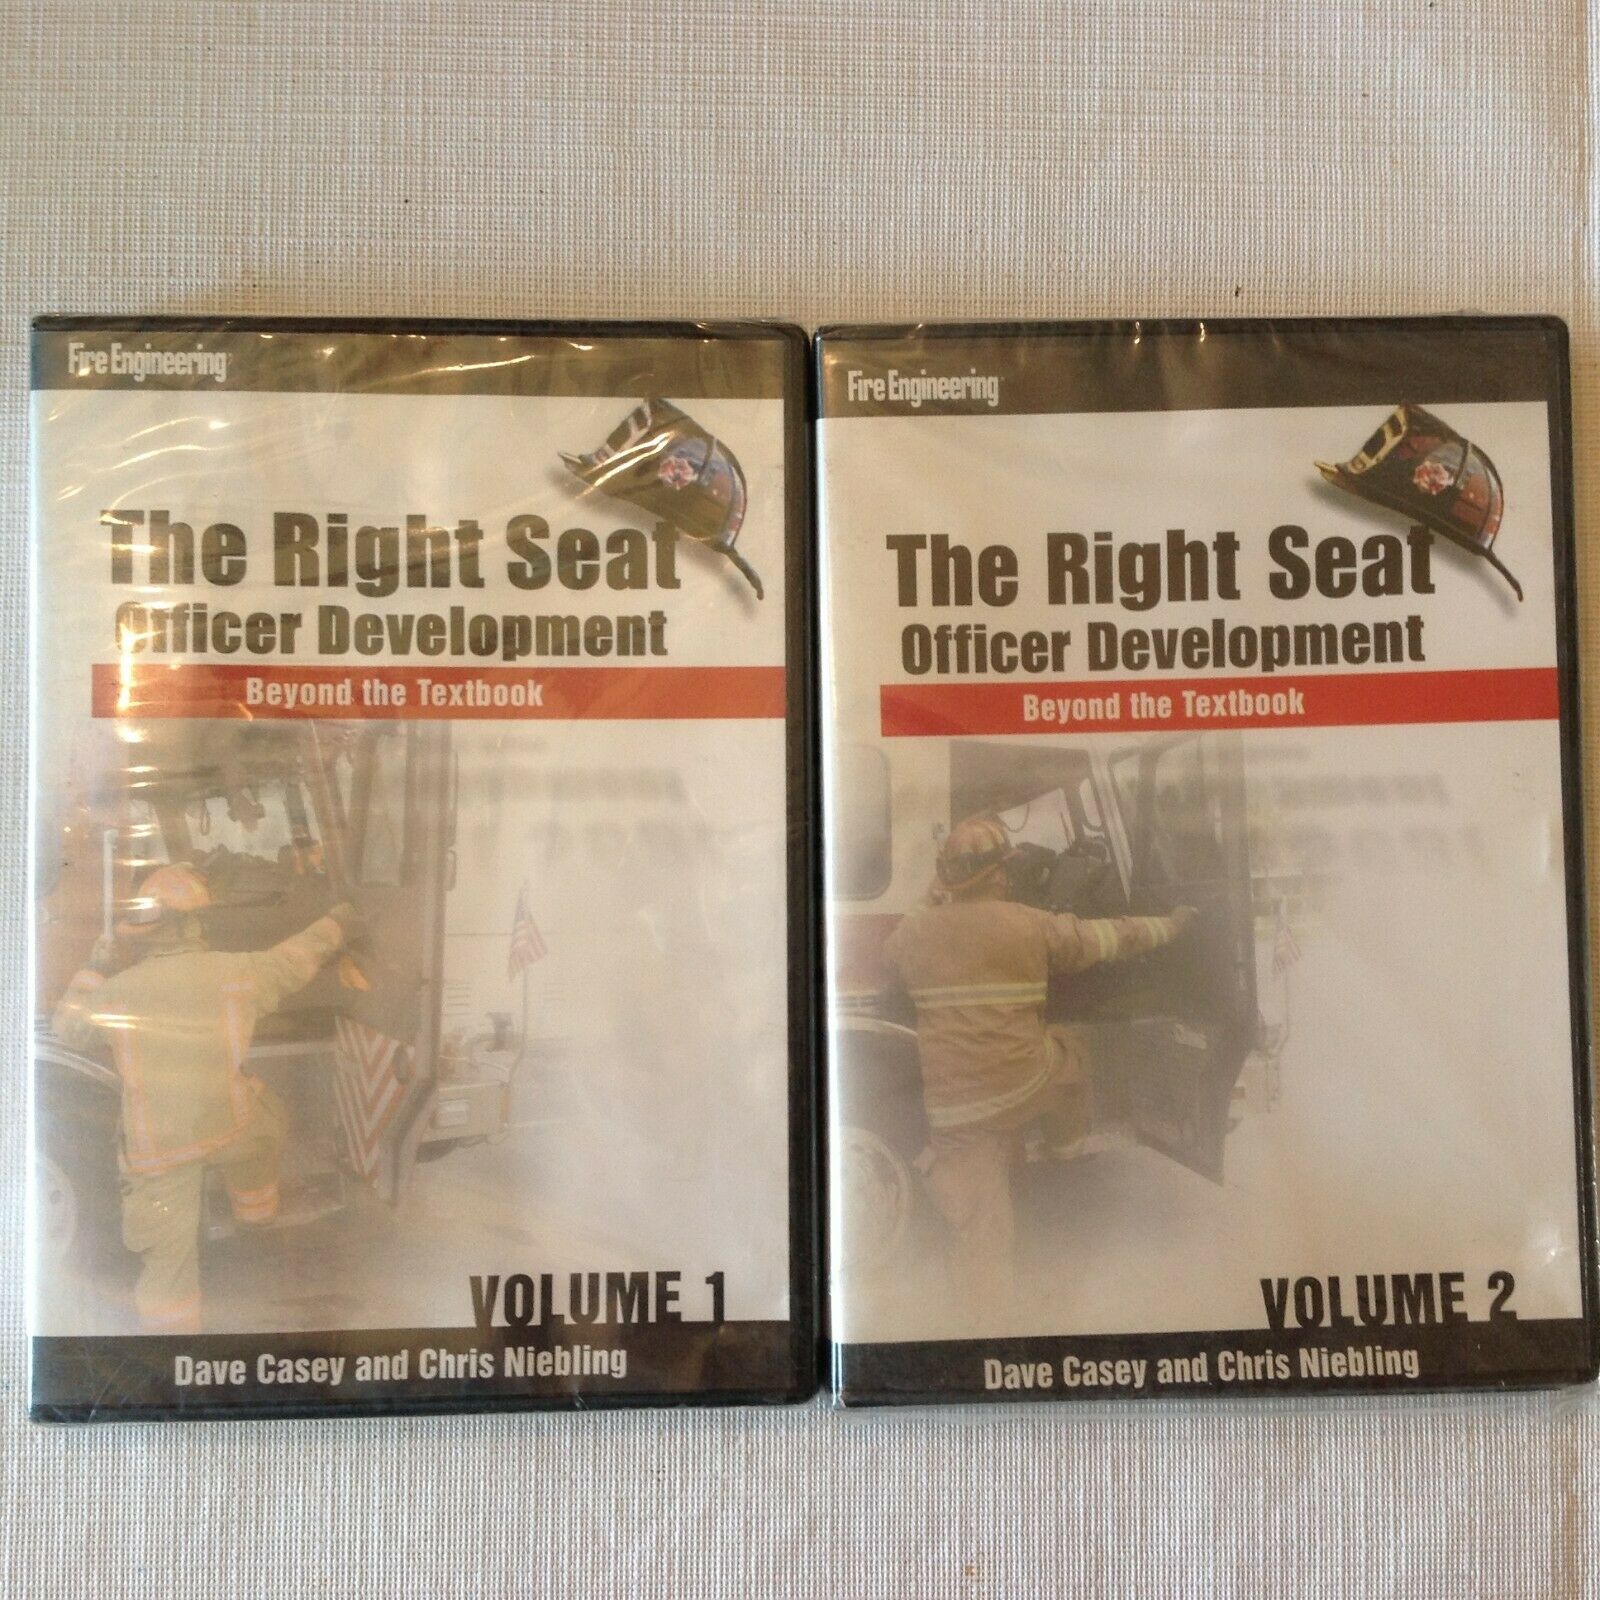 The Right Seat: Officer Development Dvd Set Vol 1 & 2 Fireengineering